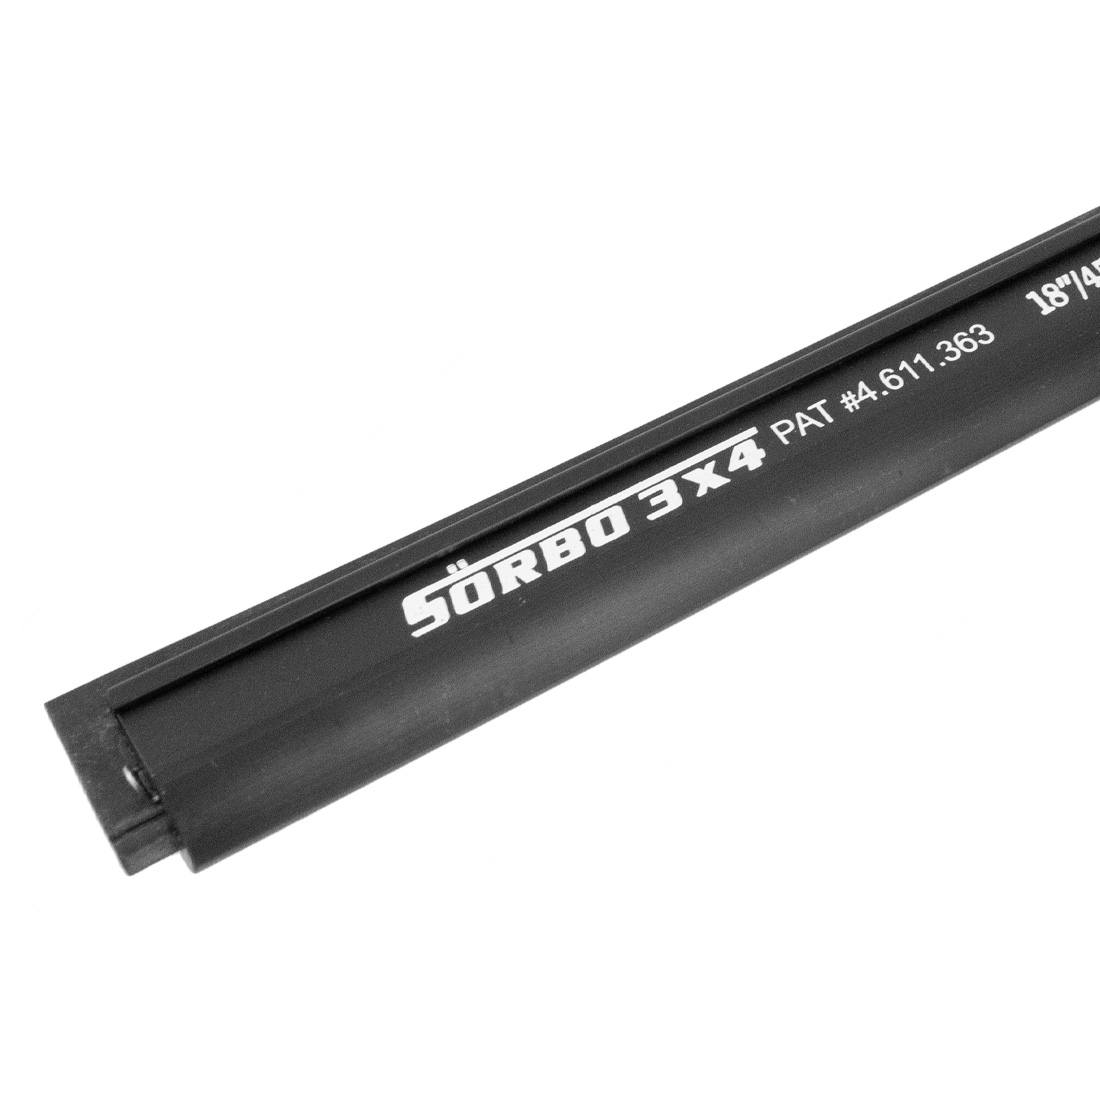 Smedbo DB2140: Sideline Shower Squeegee w/Hook - Black